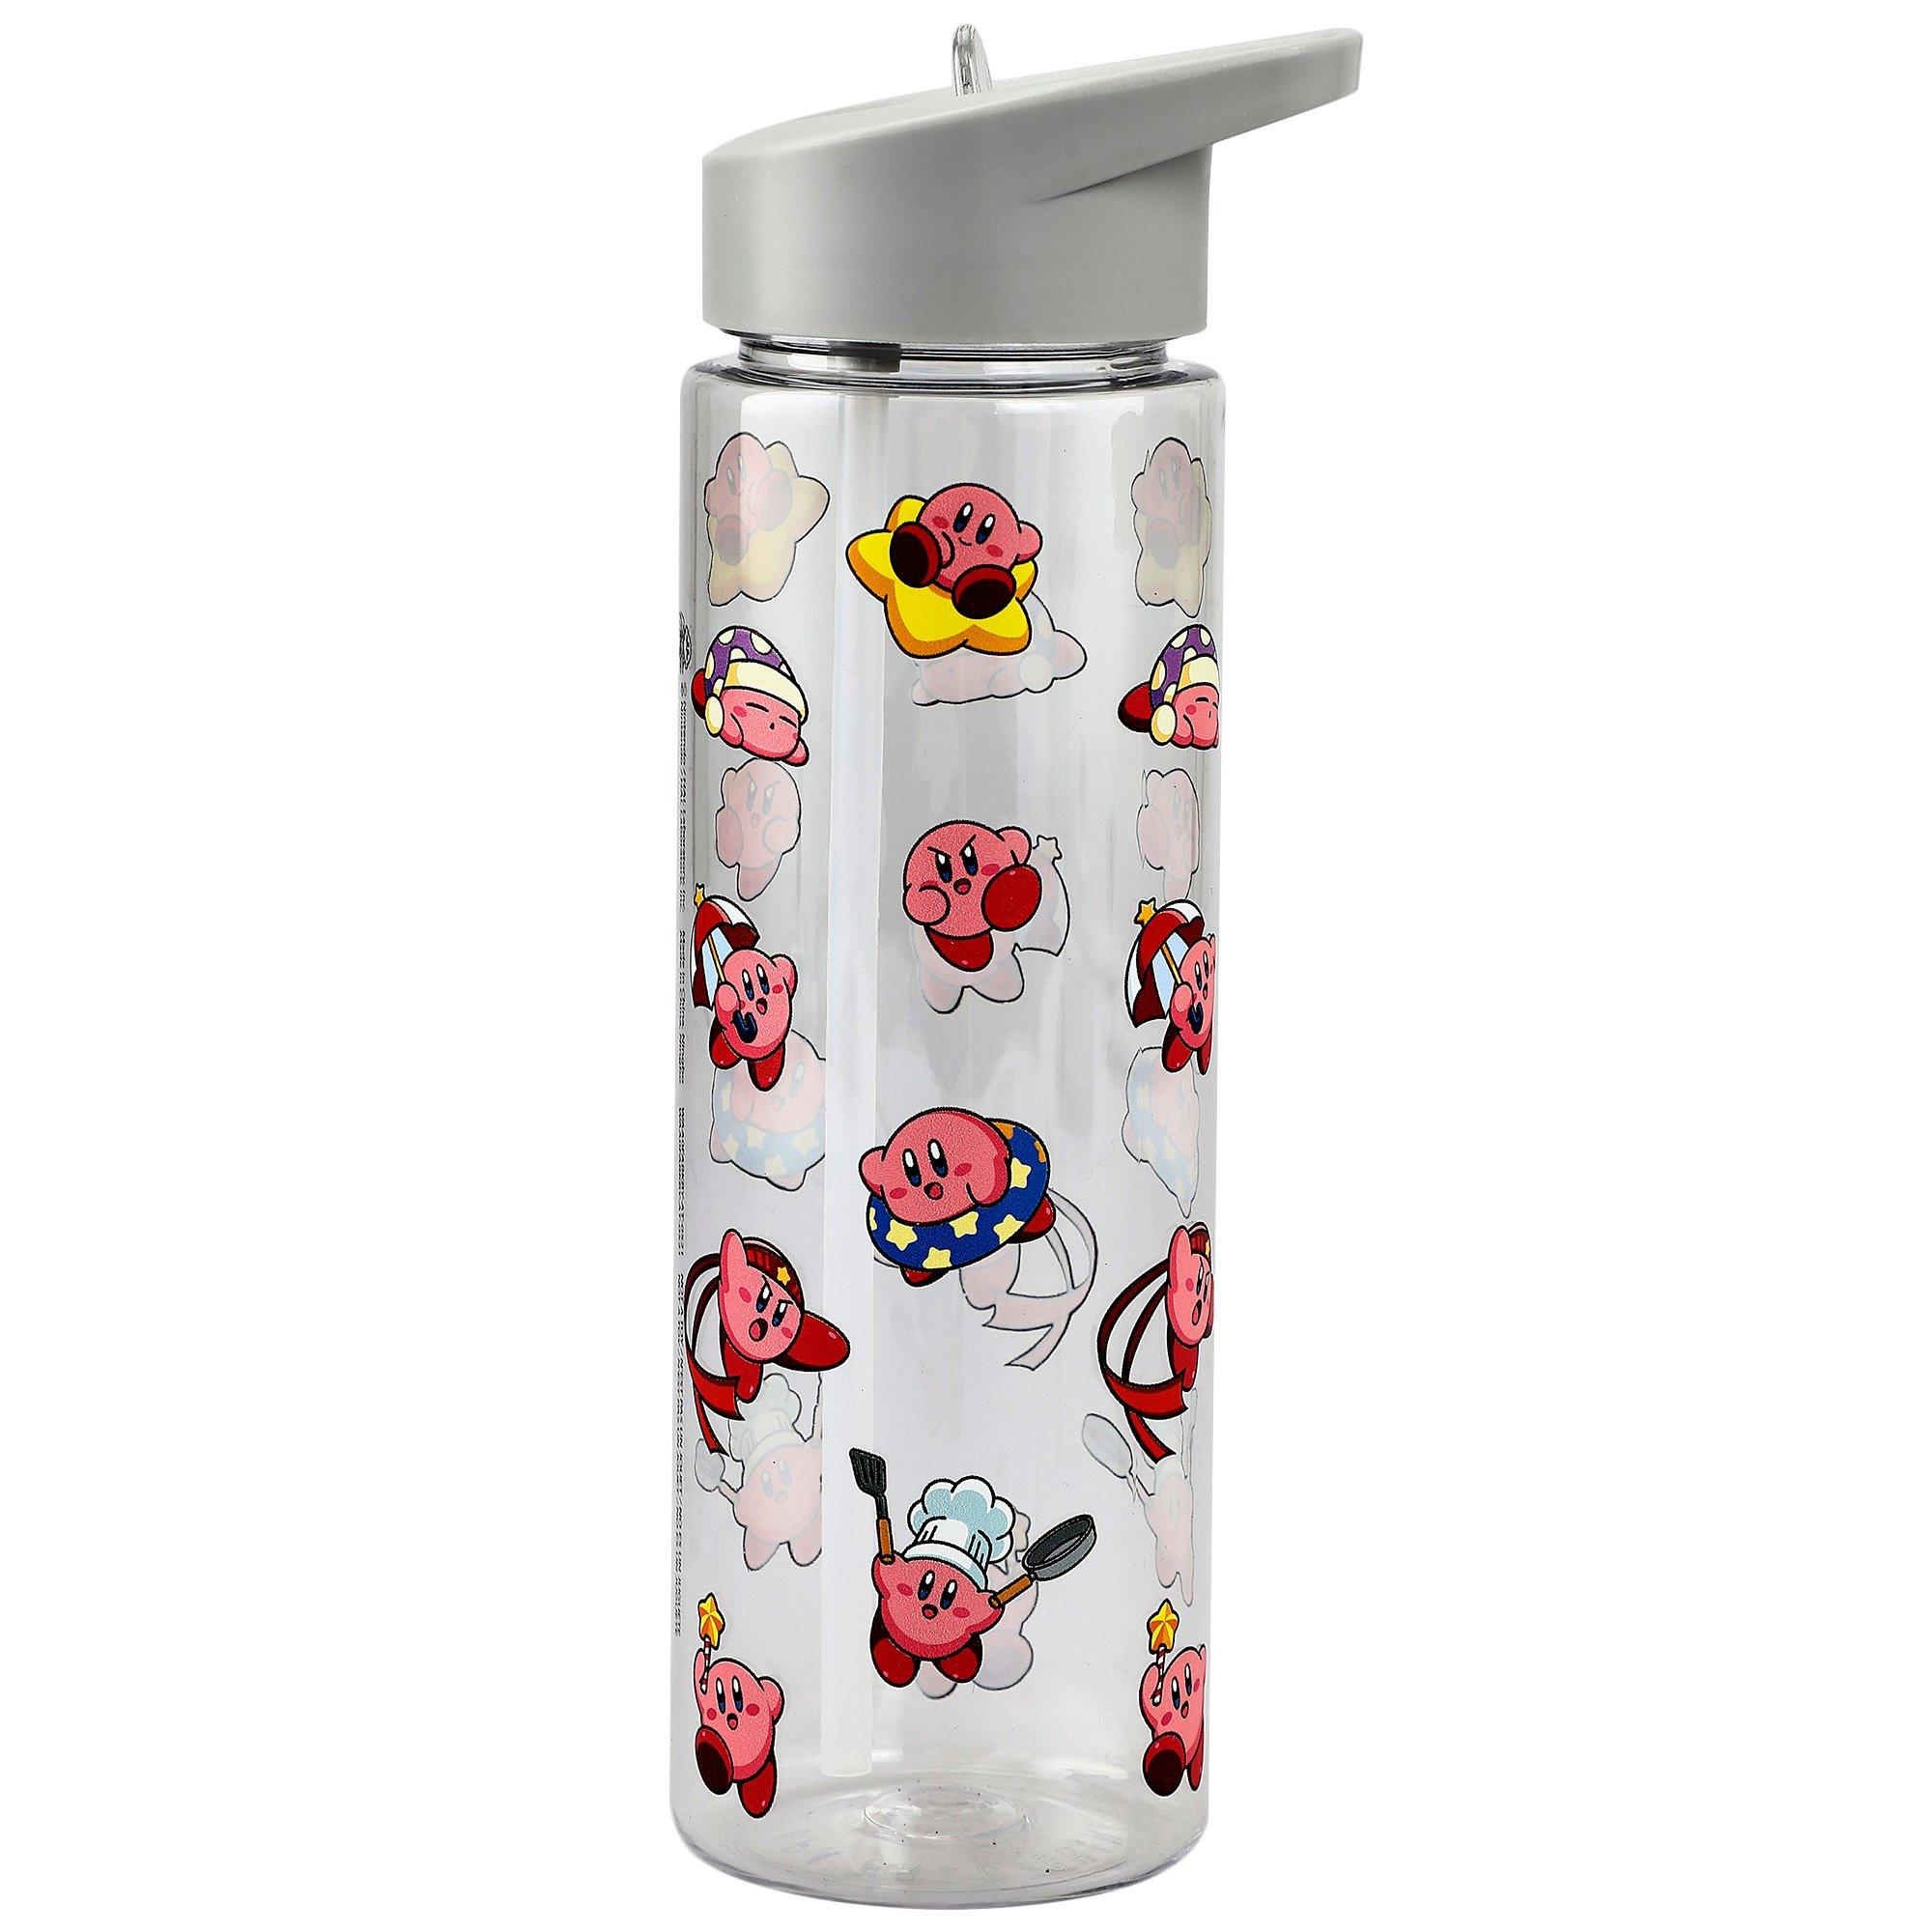 https://media.gamestop.com/i/gamestop/20008142_ALT01/Kirby-Pink-Puff-24-oz-Single-Wall-UV-Printed-Water-Bottle?$pdp$